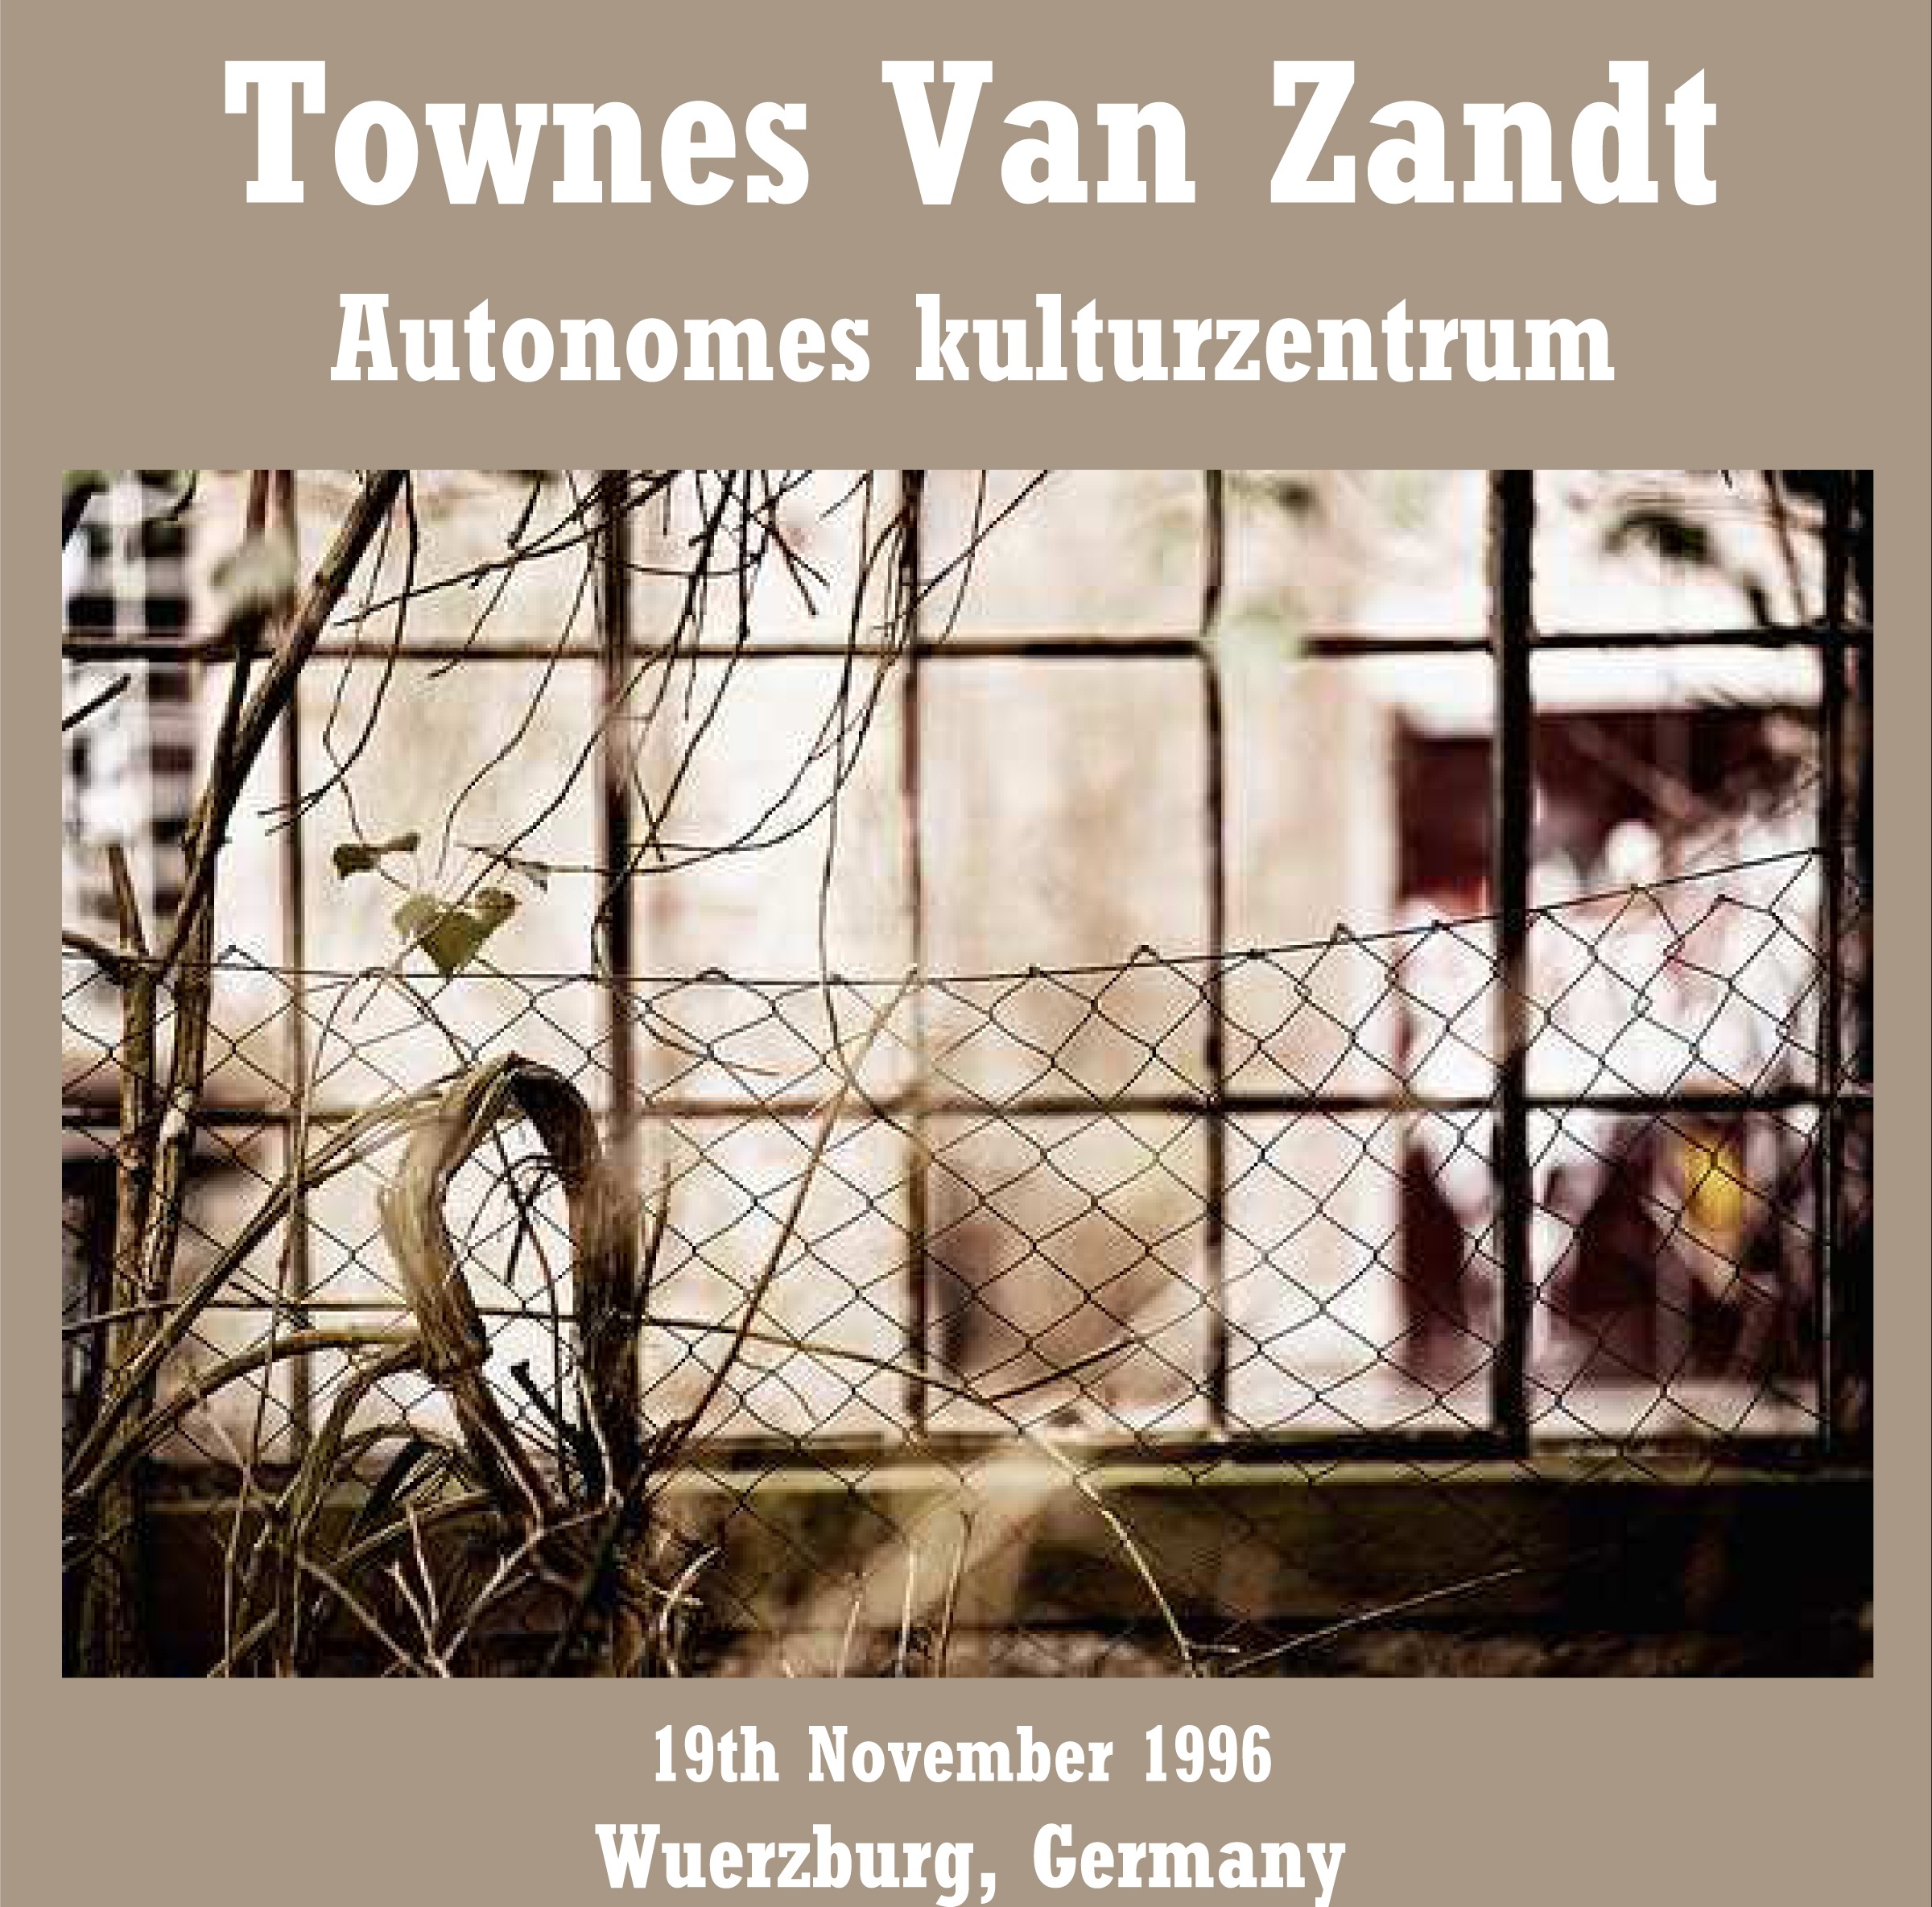 TownesVanZandt1996-11-19AutonomesKulturzentrumWuerzburgGermany (1).jpg